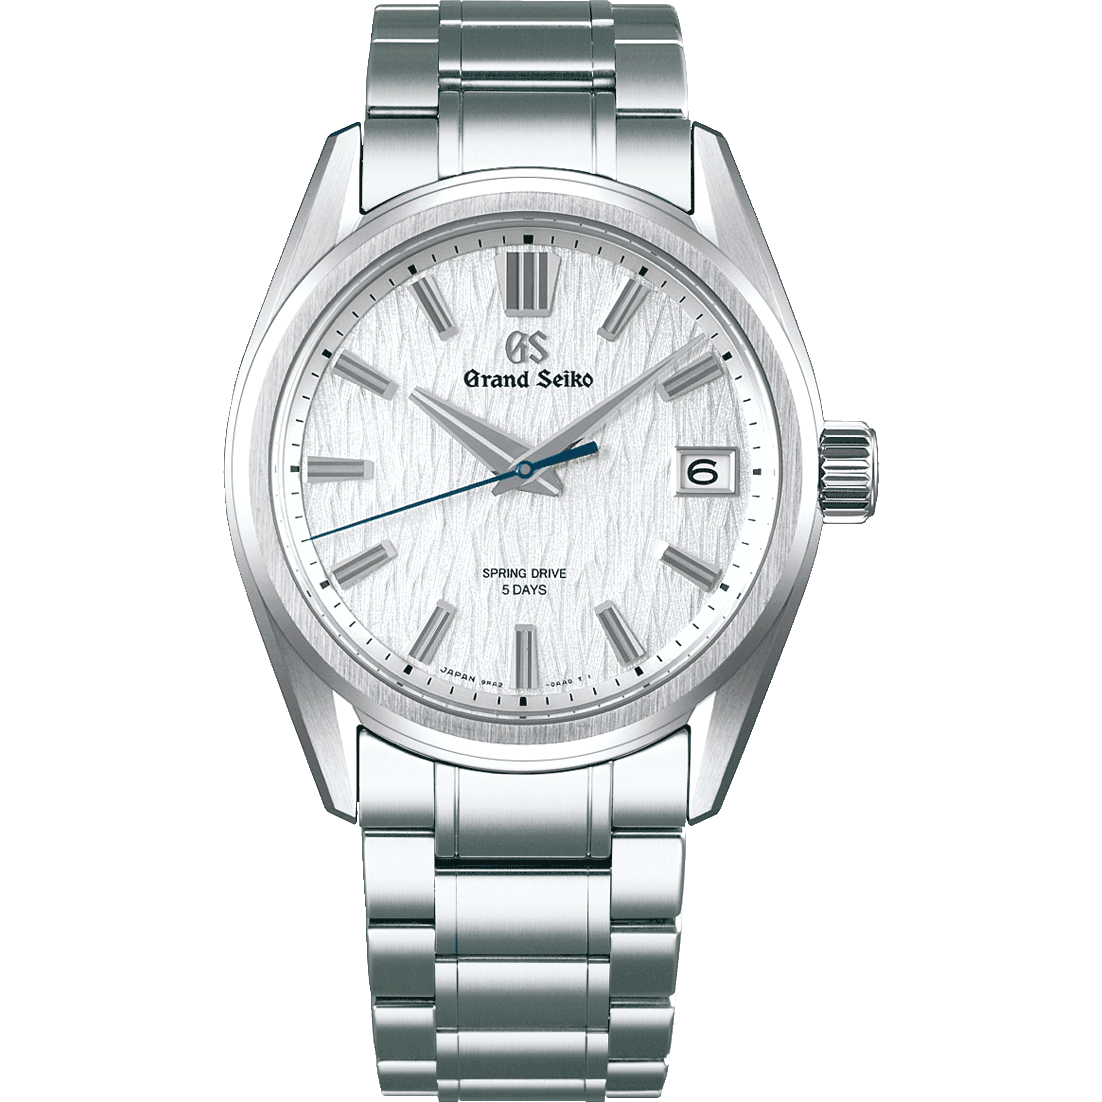 Grand Seiko SLGA009 silver dial spring drive watch